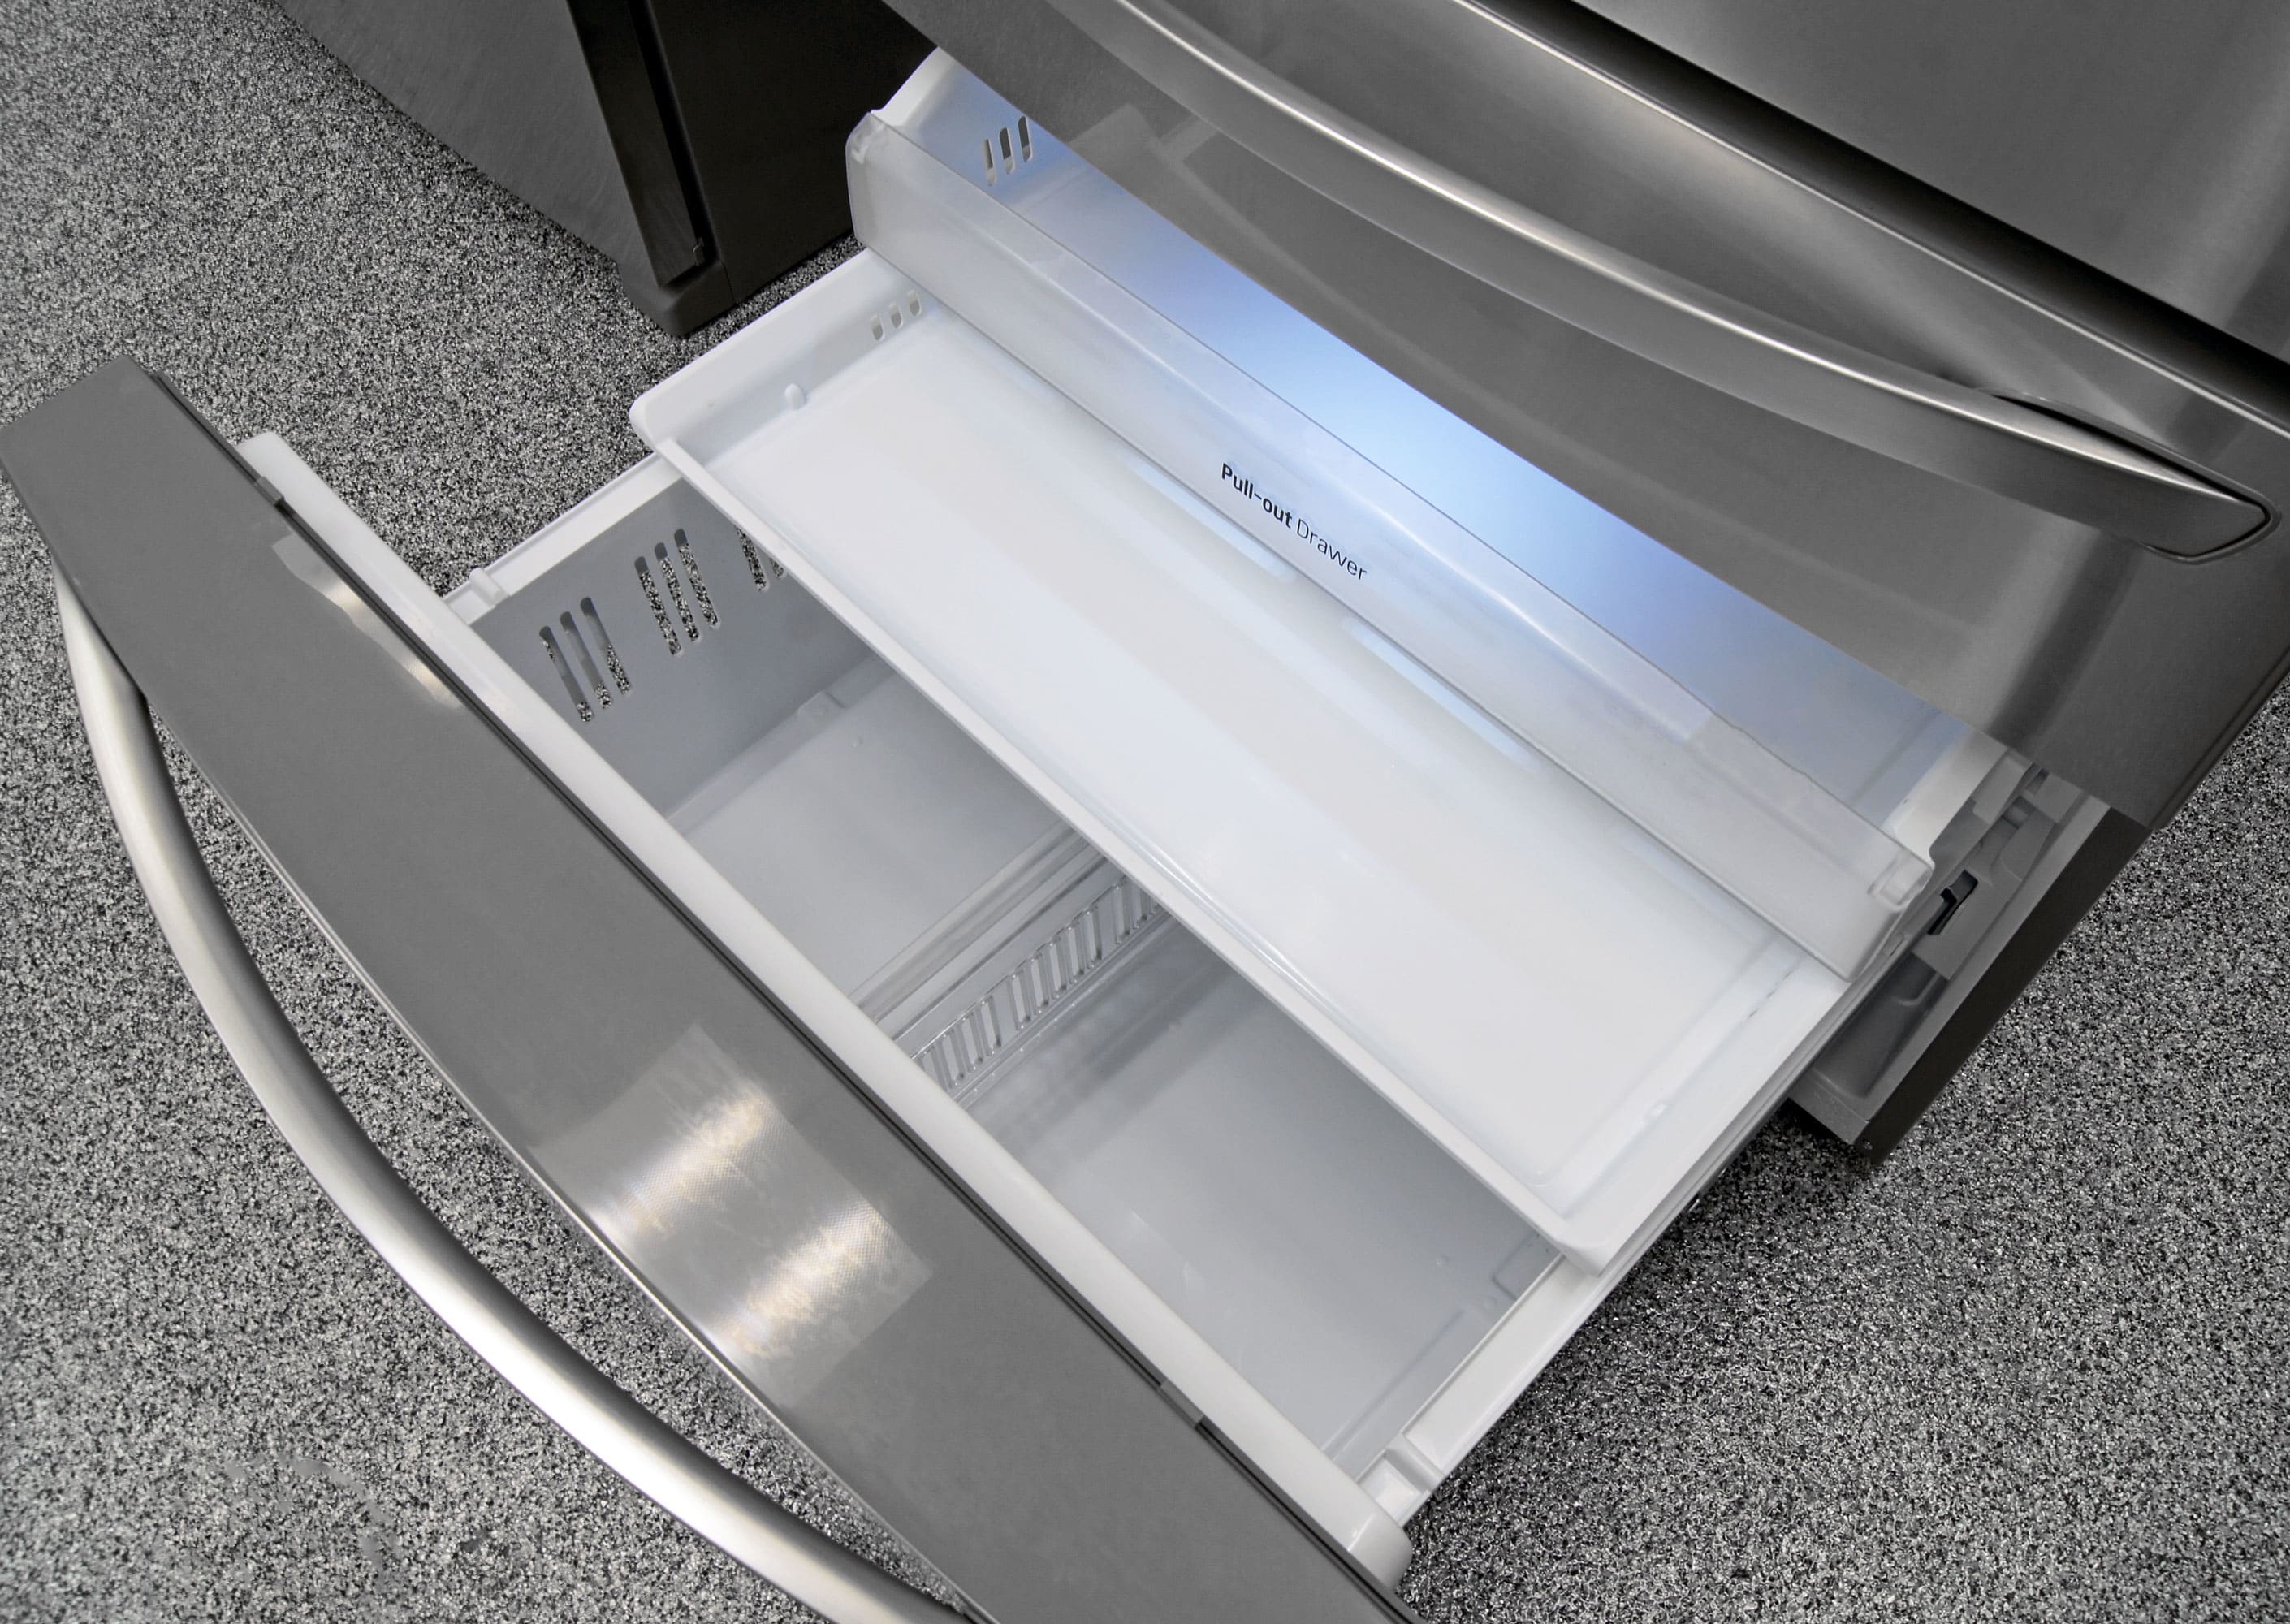 LG LMXS30786S Refrigerator Review Refrigerators